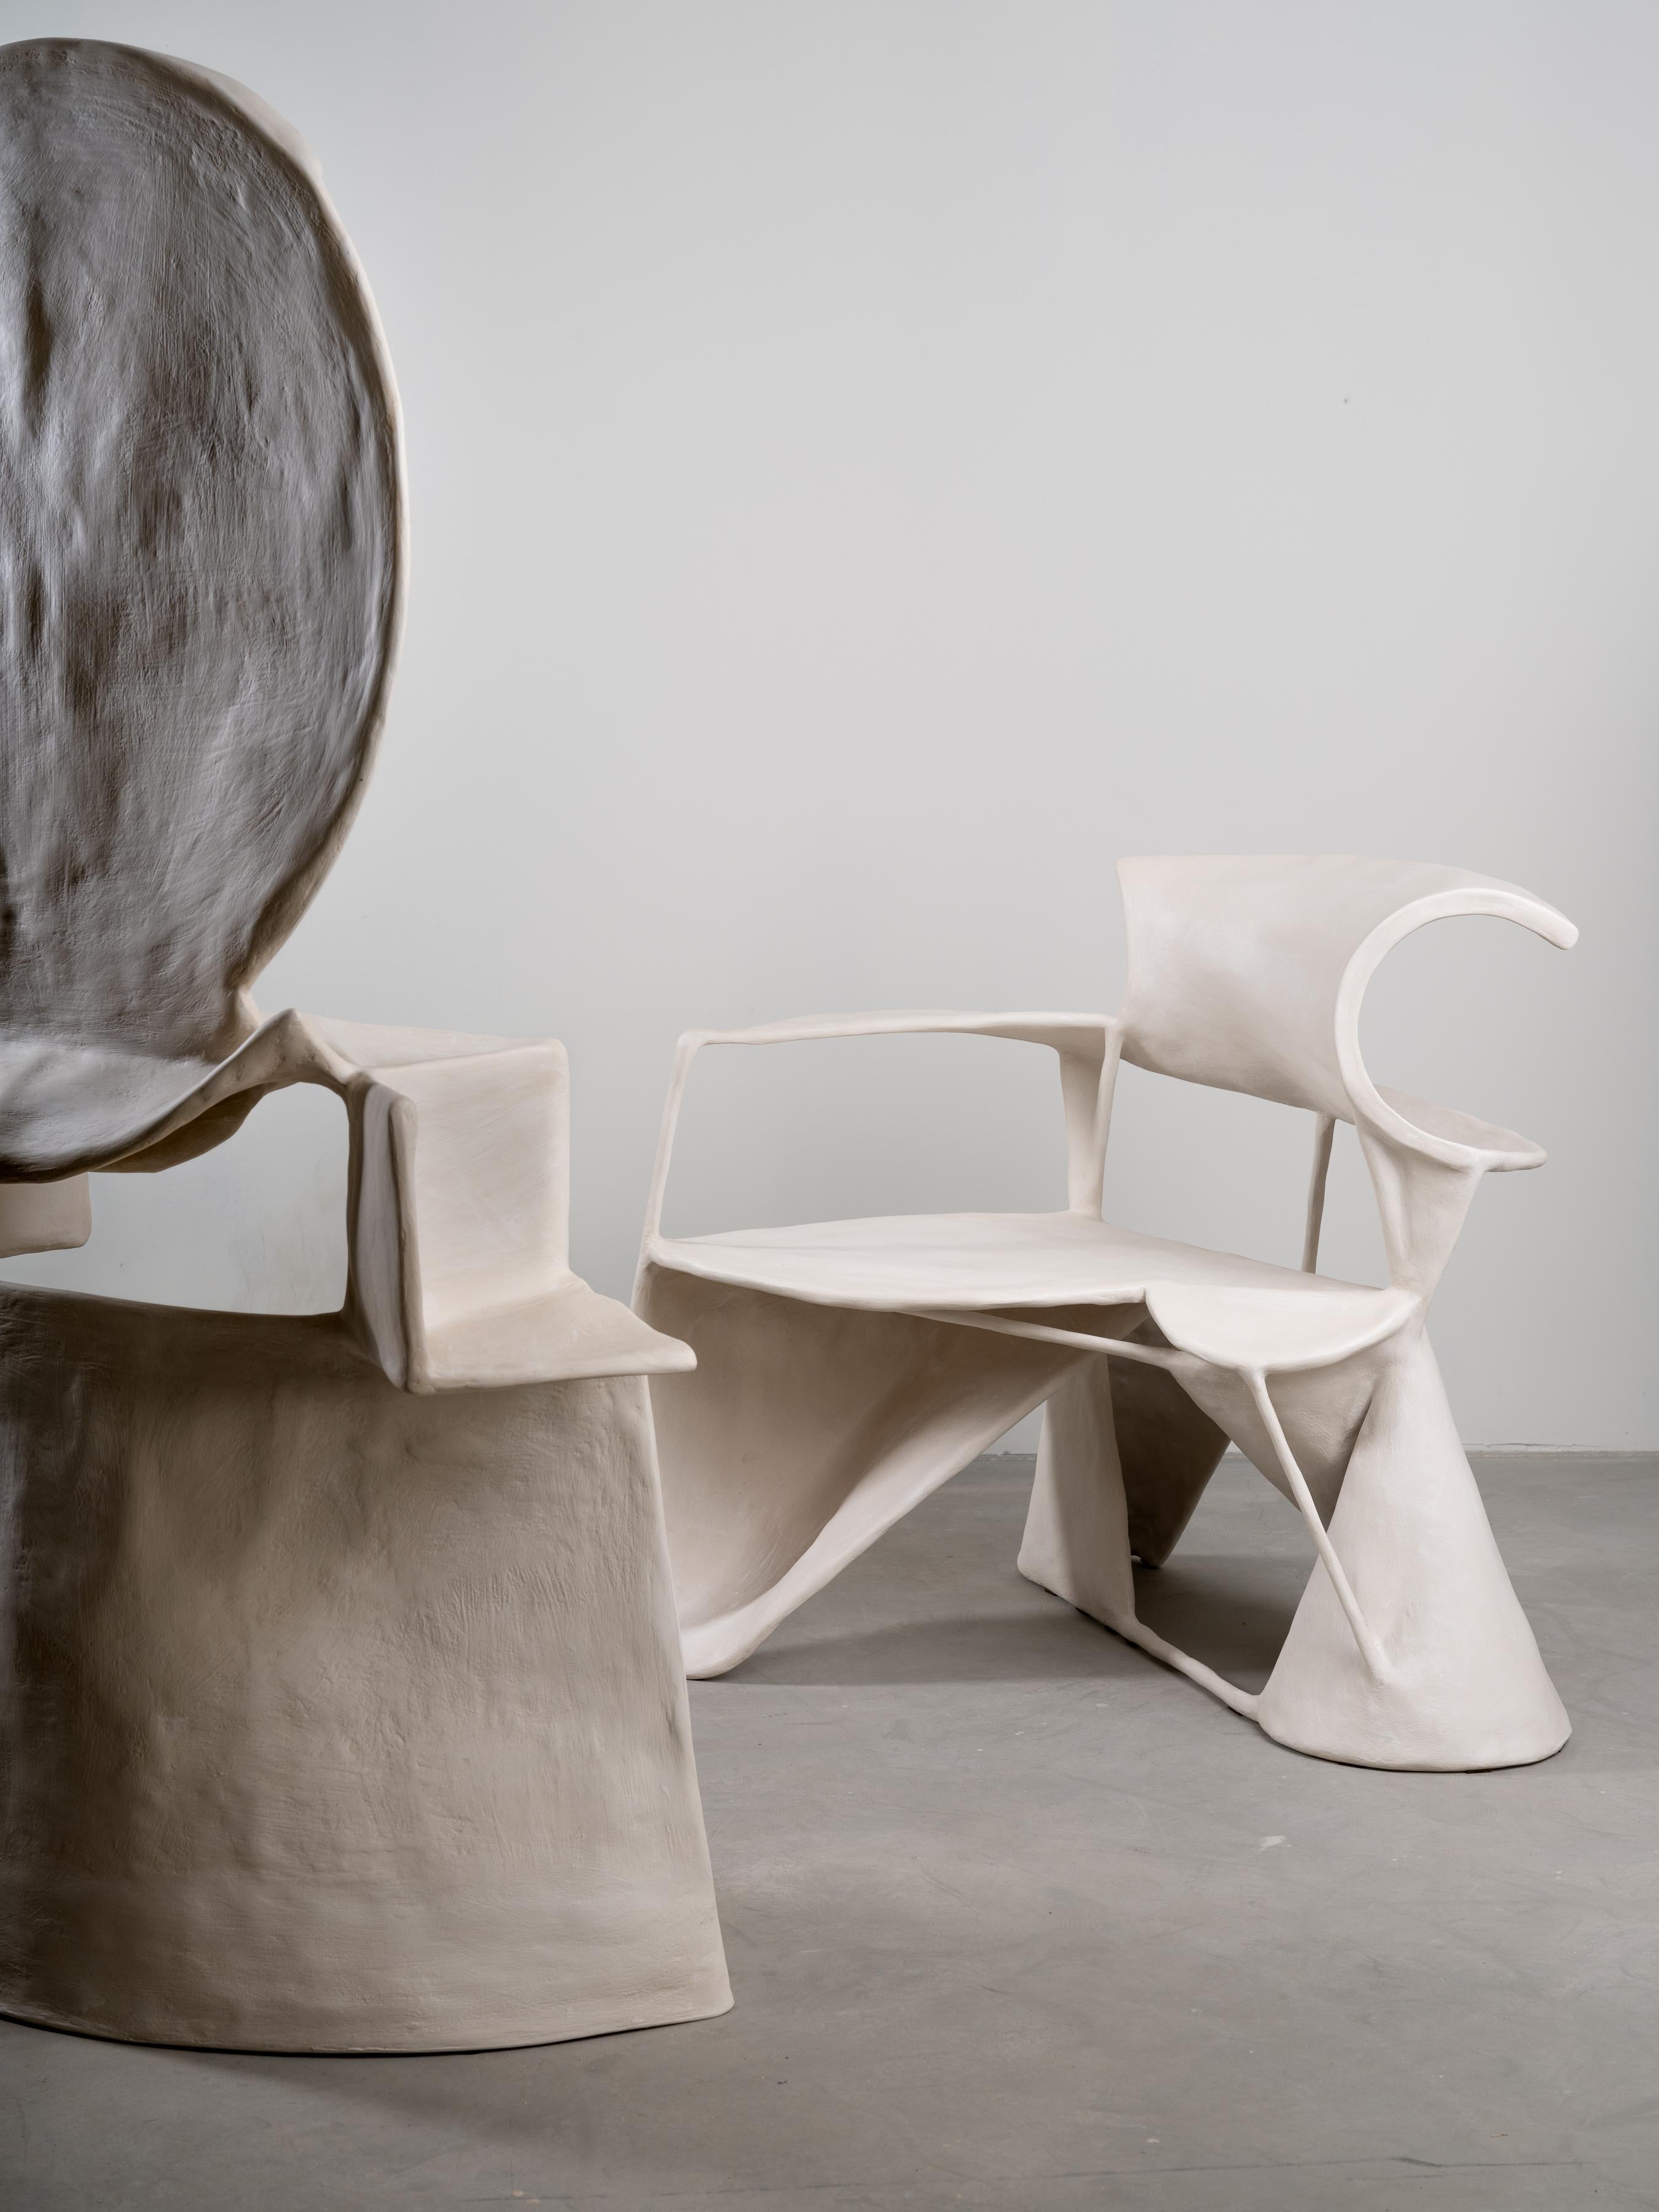 Steel Contemporary Design Textured Curved Sculptures Coiffeuse by Jordan van der Ven For Sale